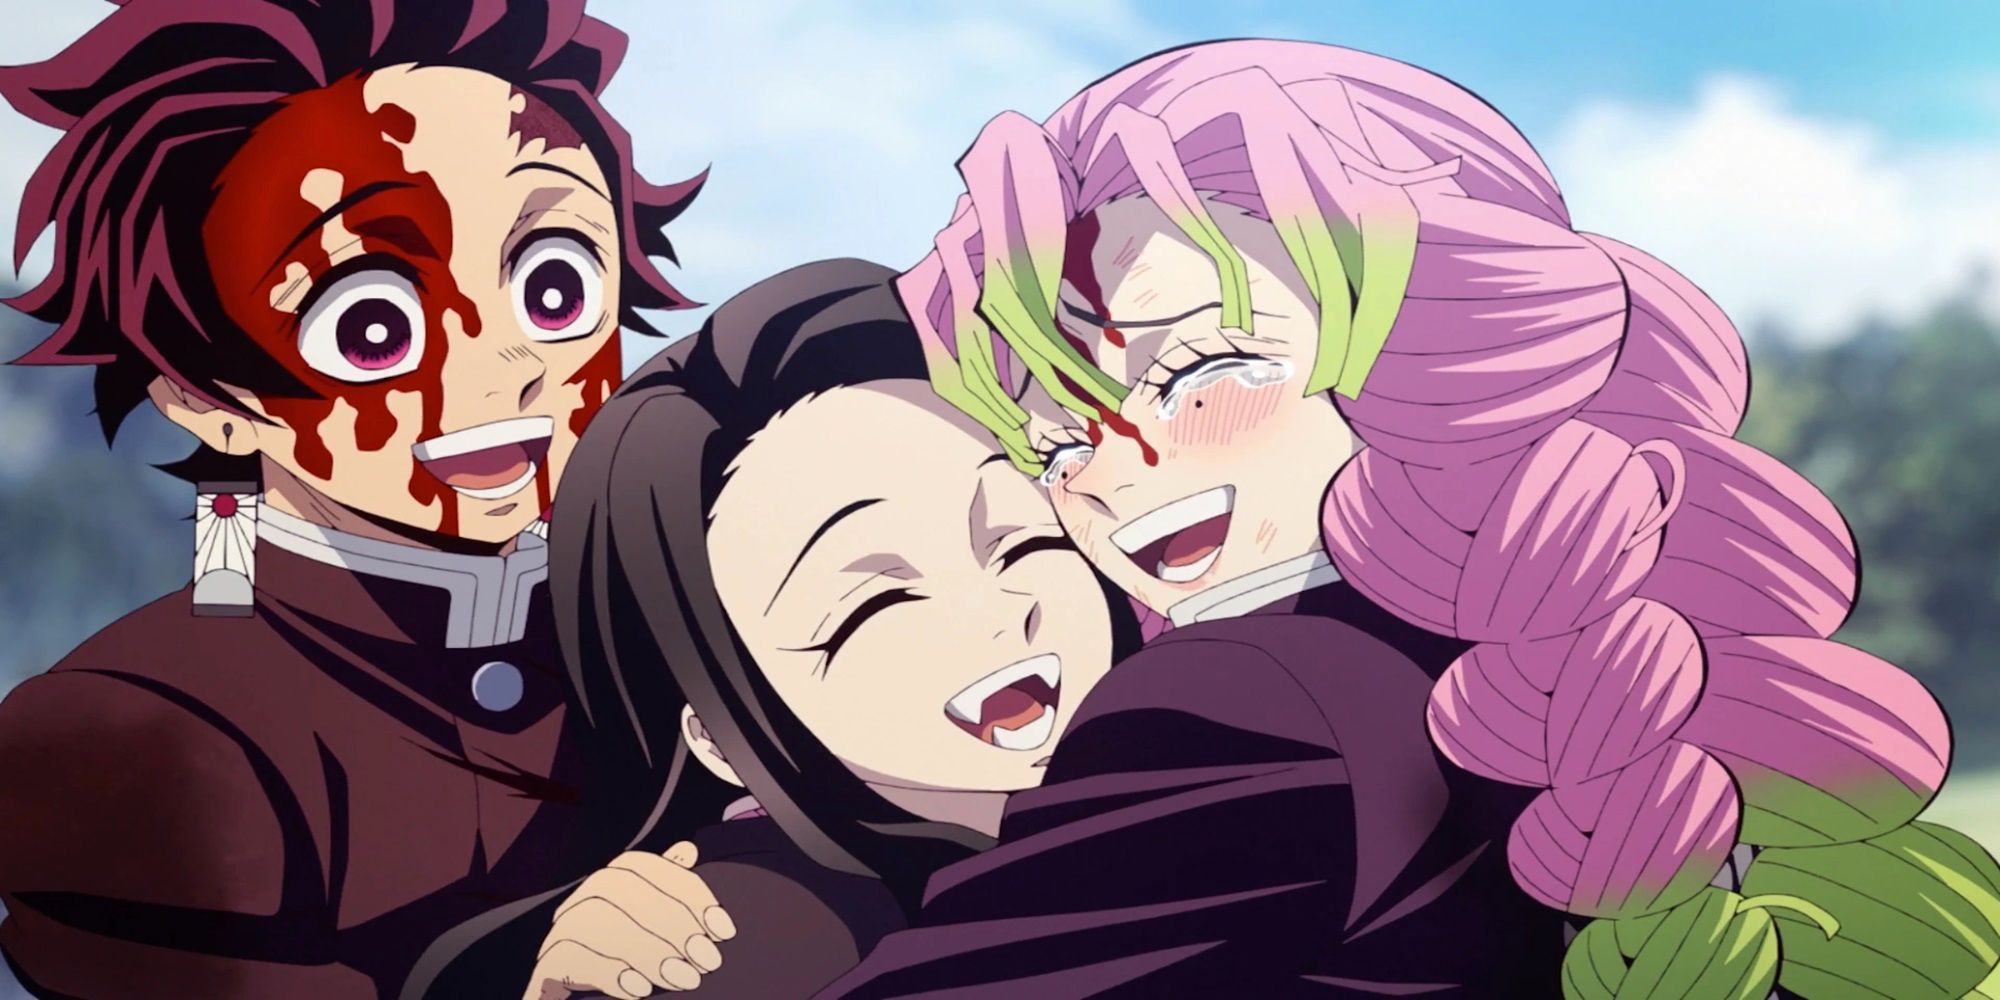 Demon Slayer Season 3 Finale screen cap of Tanjiro, Nezuko, and Mitsuri sharing an embrace.